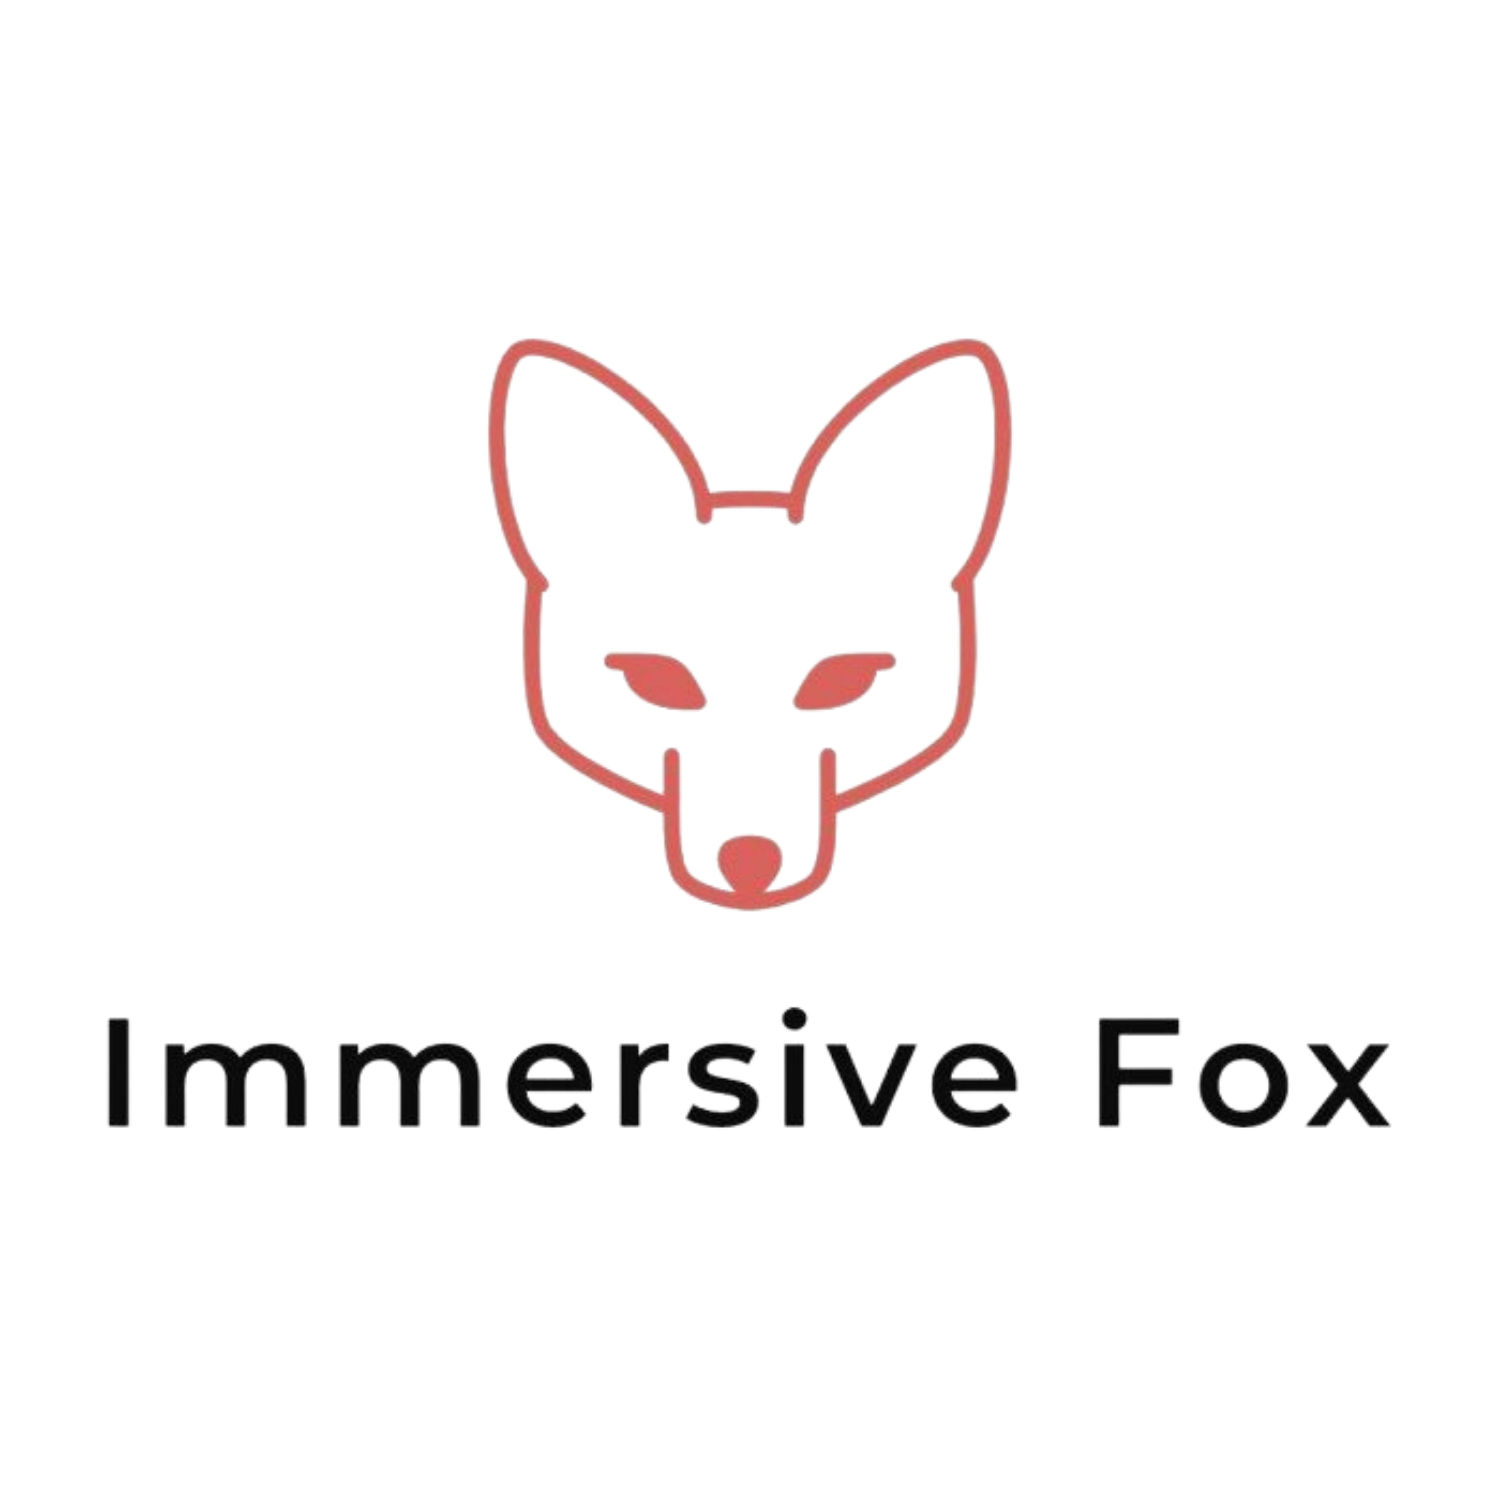 Авто Fox логотип. Fox org